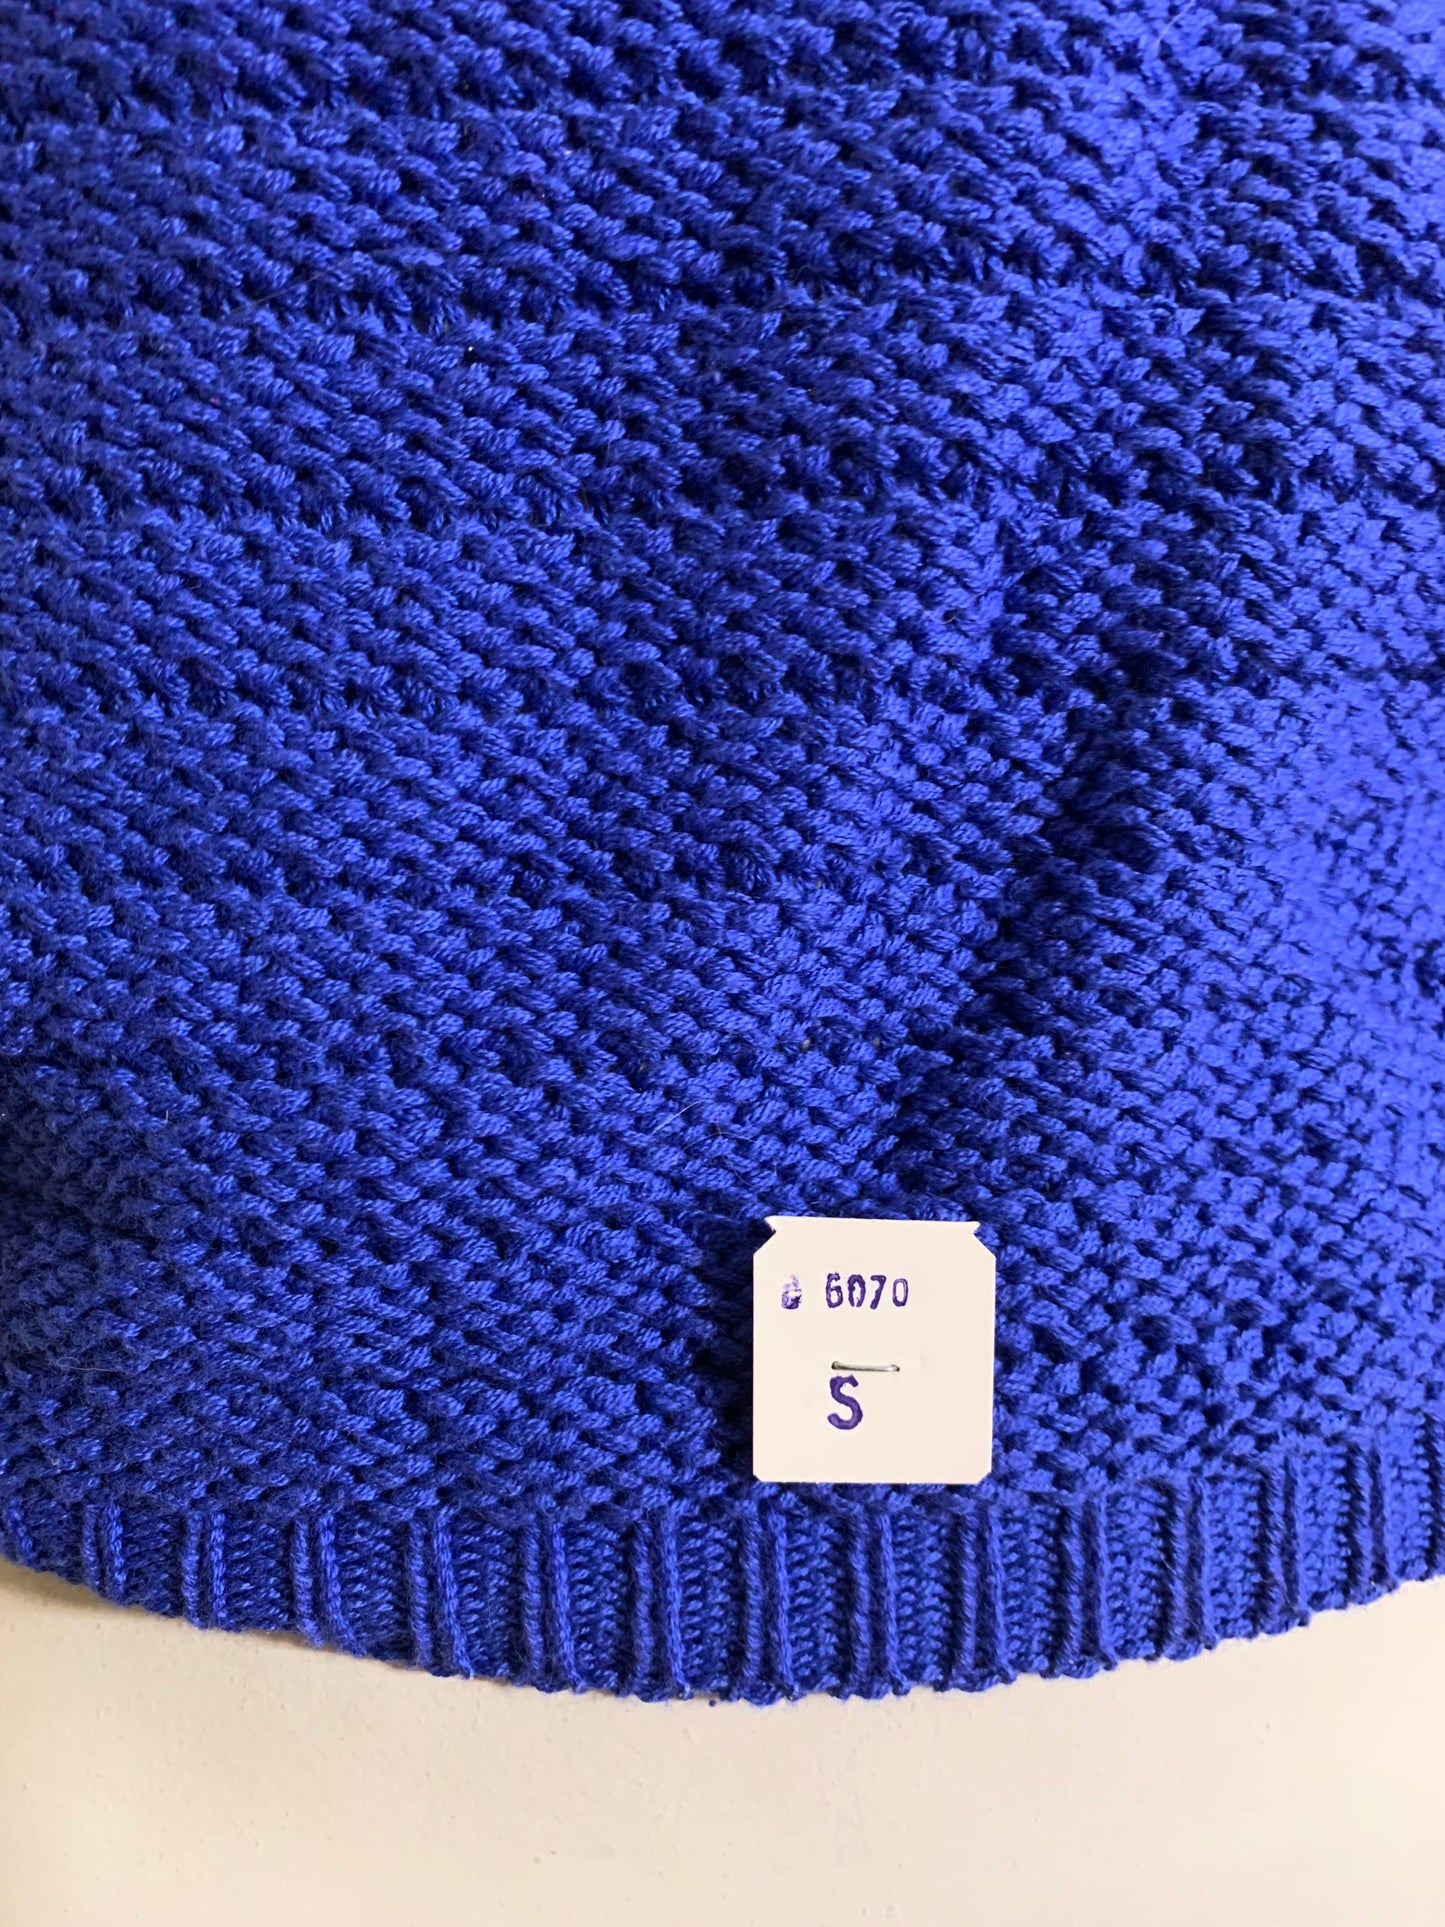 Royal Blue Sweater Knit Tank Top circa 1980s